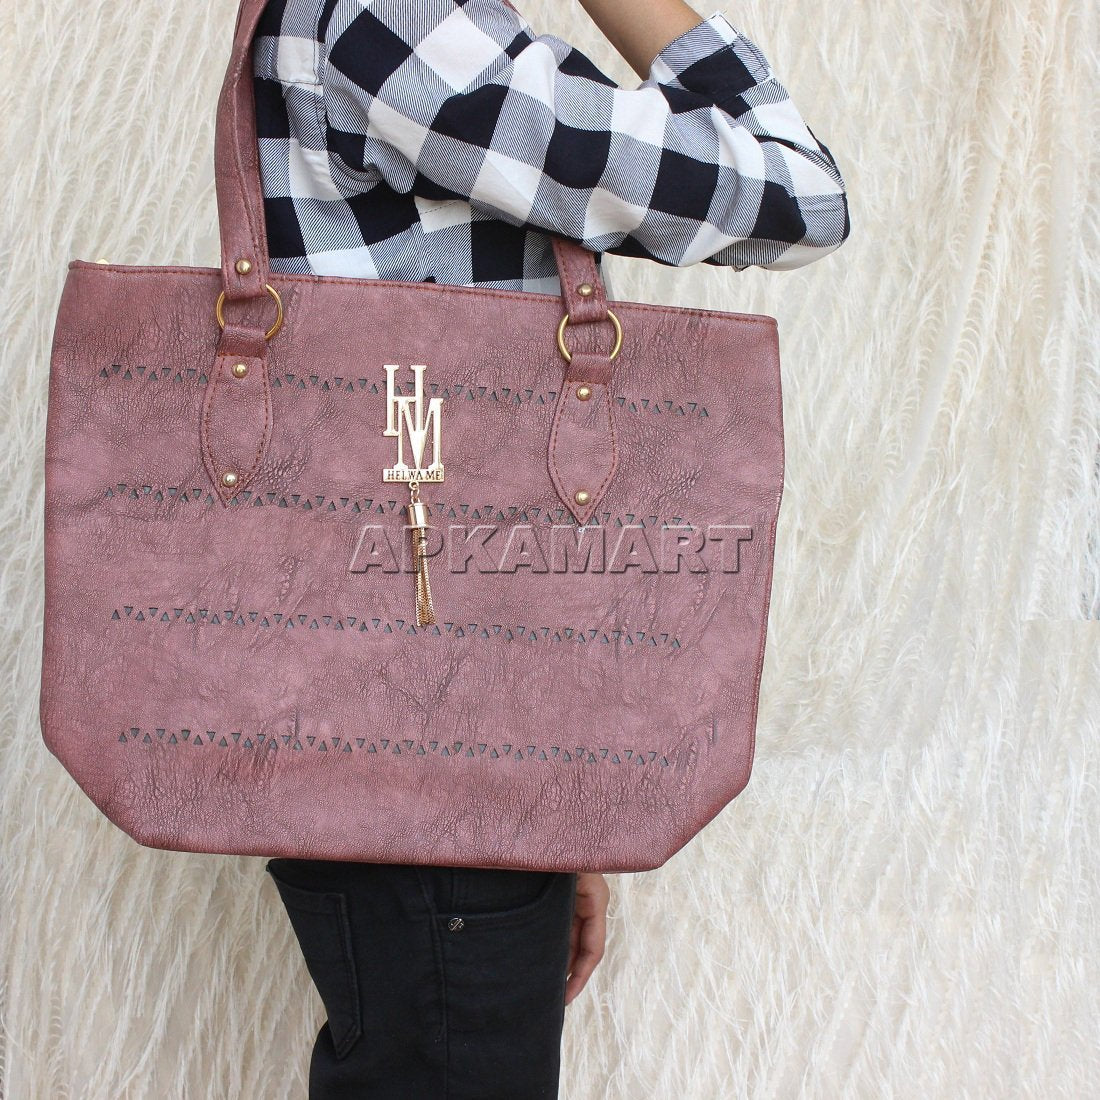 Handbags for Women  - Ideal for Office & Casual - ApkaMart